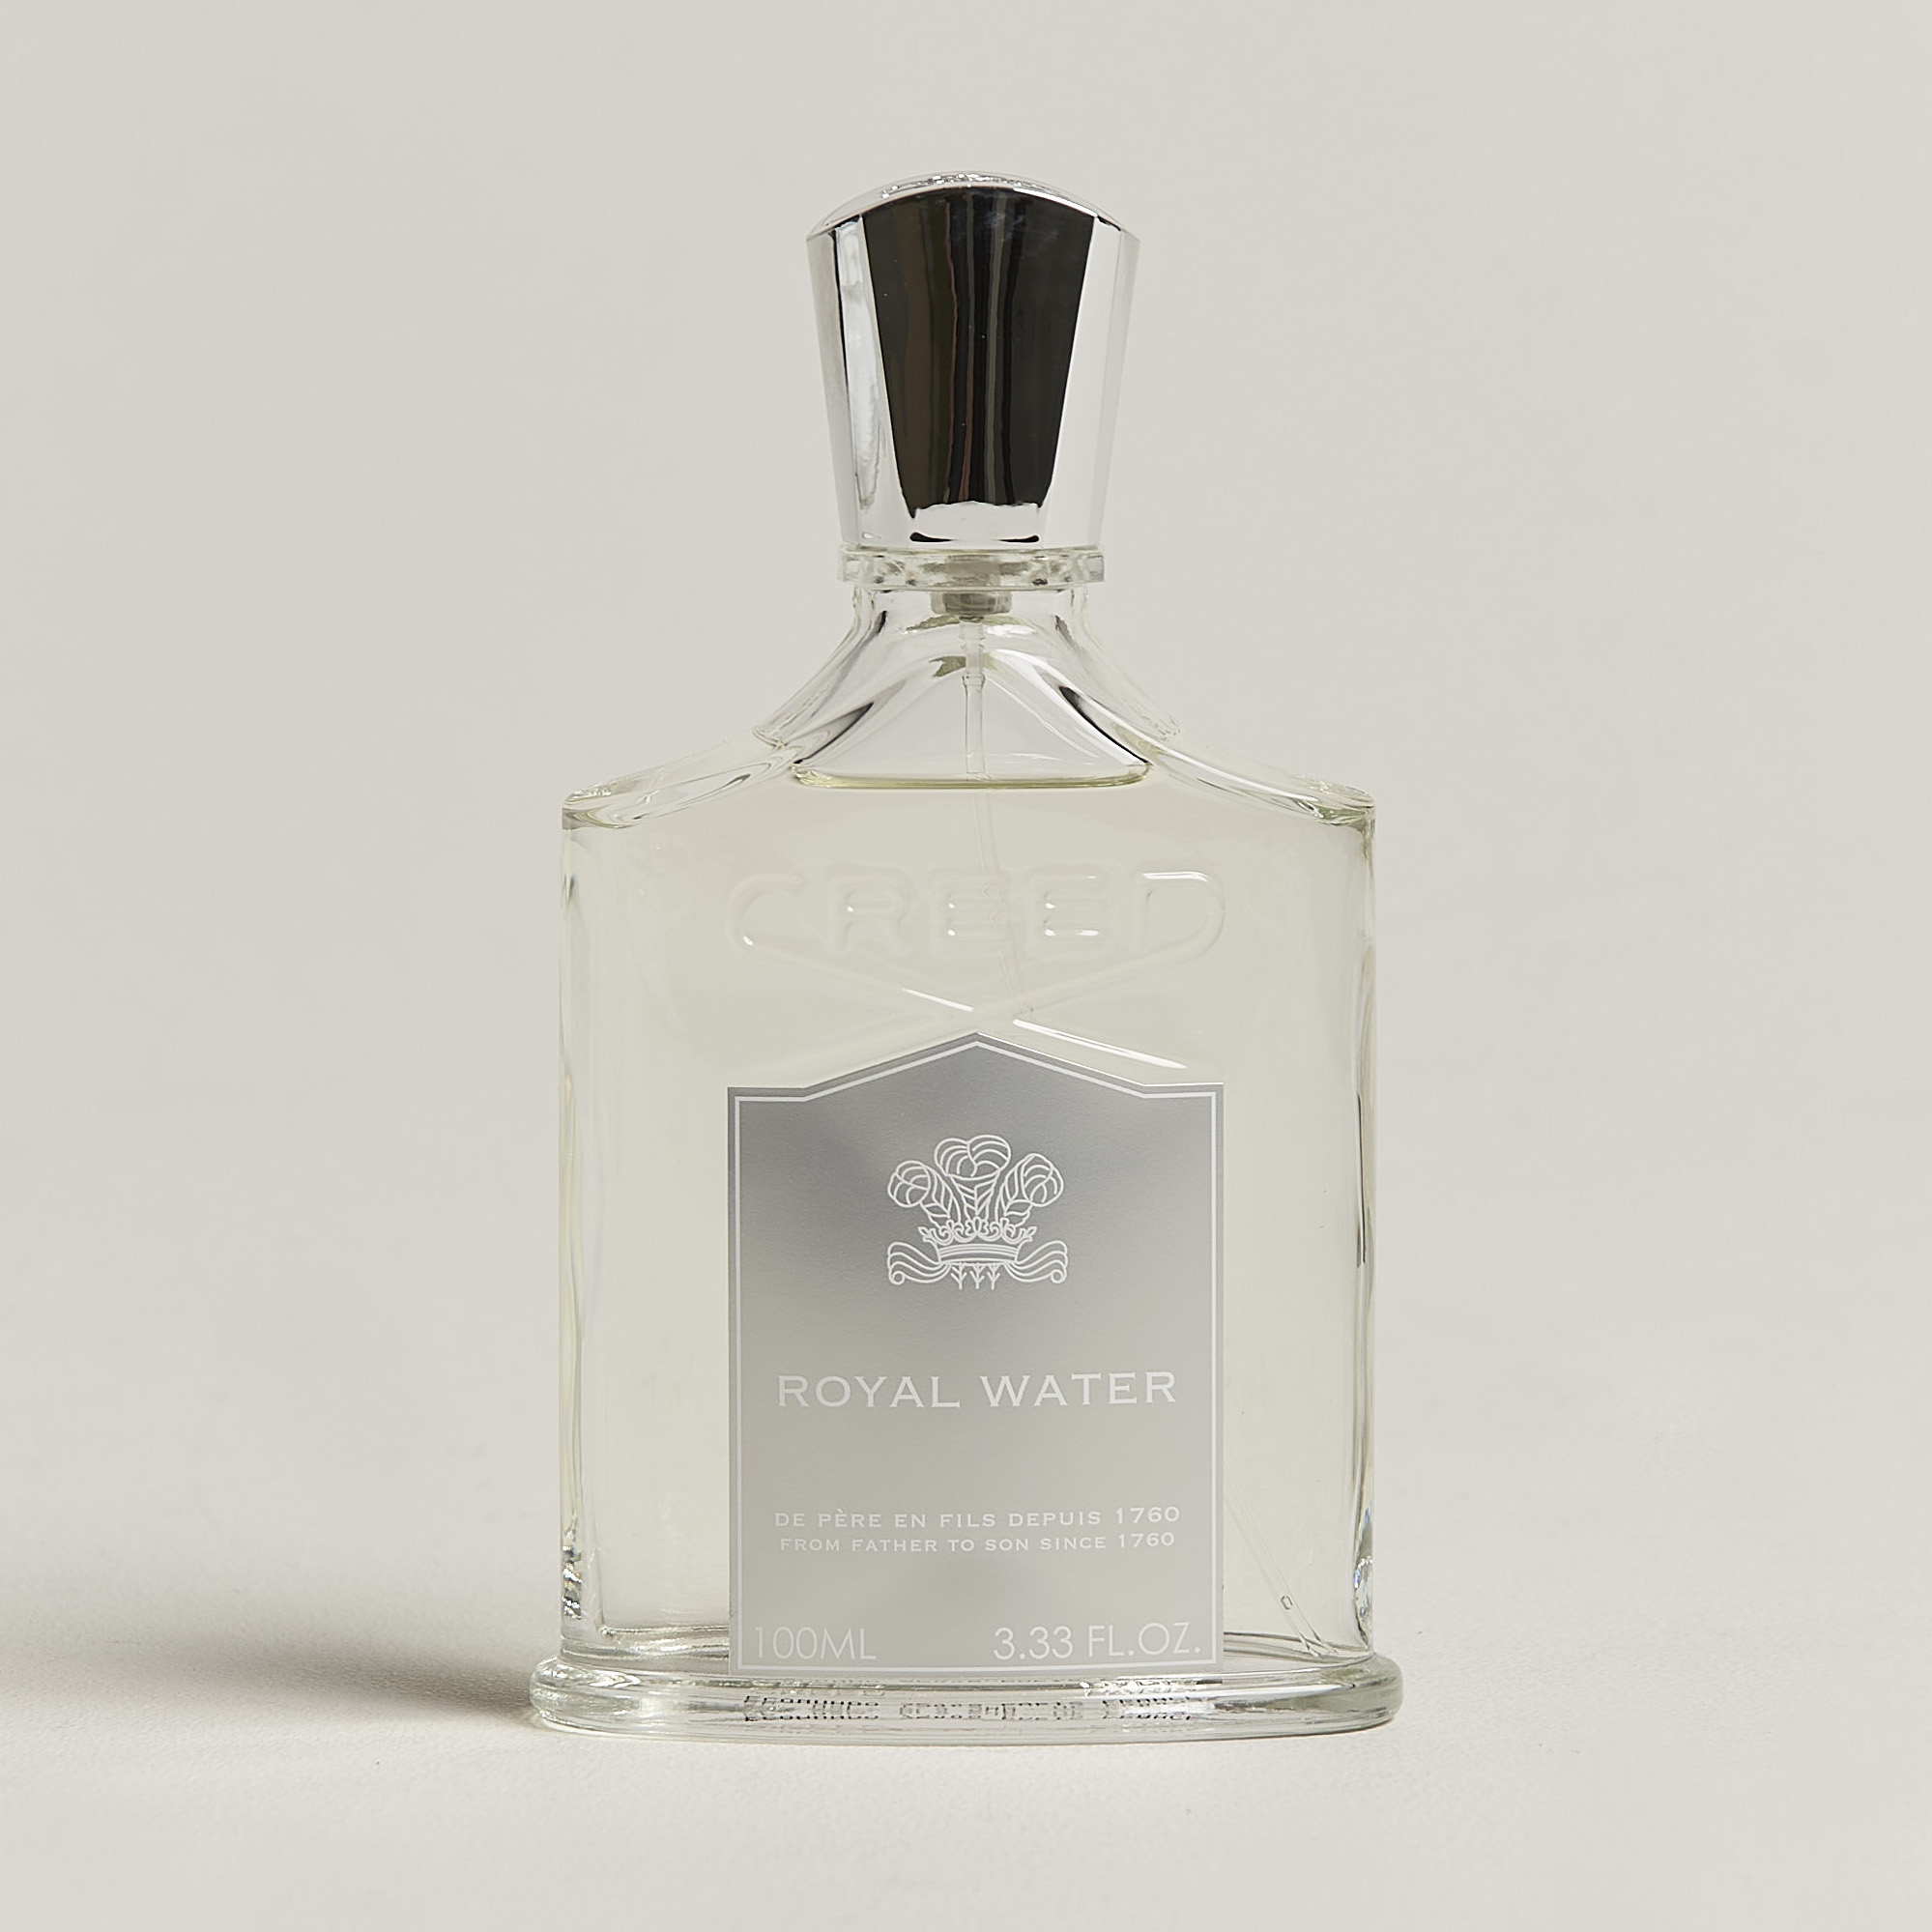 Creed Royal Water Eau de Parfum 100ml at CareOfCarl.com